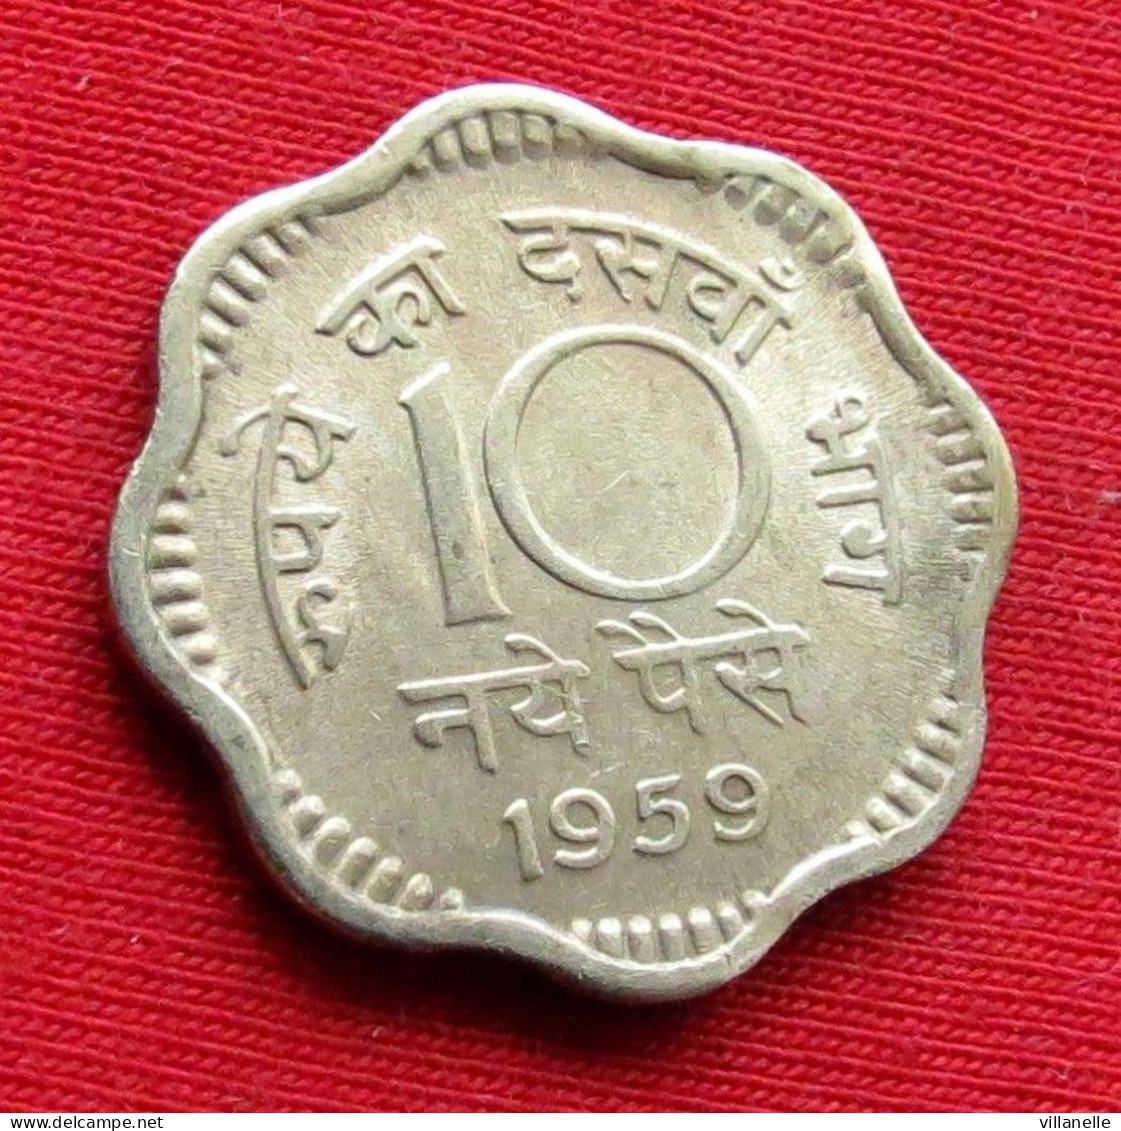 India 10 Naye Paise 1959 C KM# 24.2 *V1T Calcutta Inde Indien Indies Indes - Inde